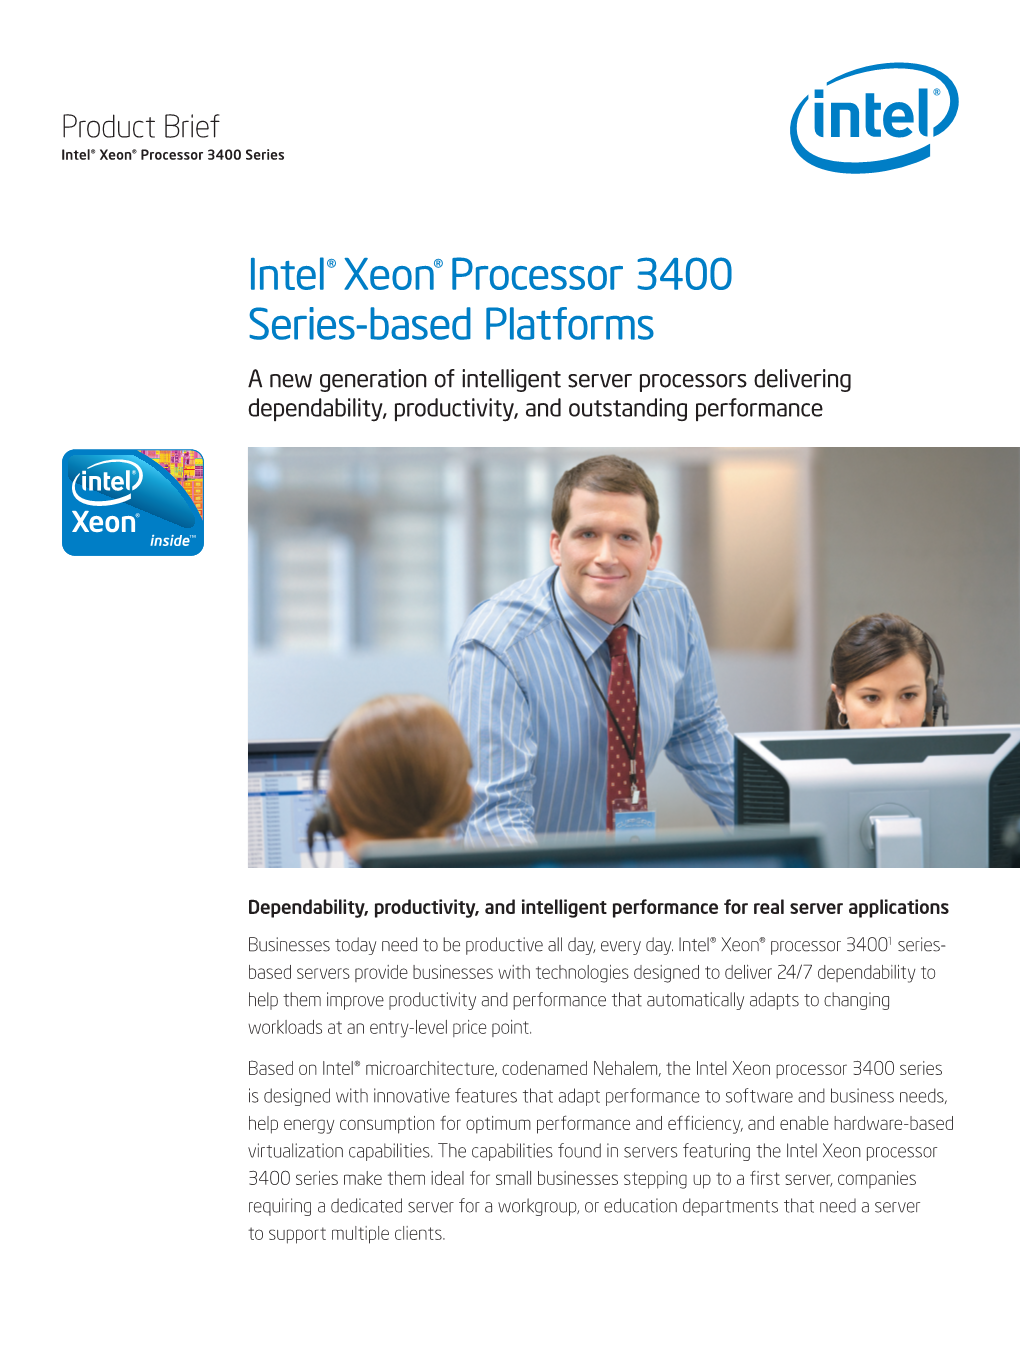 Intel® Xeon® Processor 3400 Series-Based Platforms